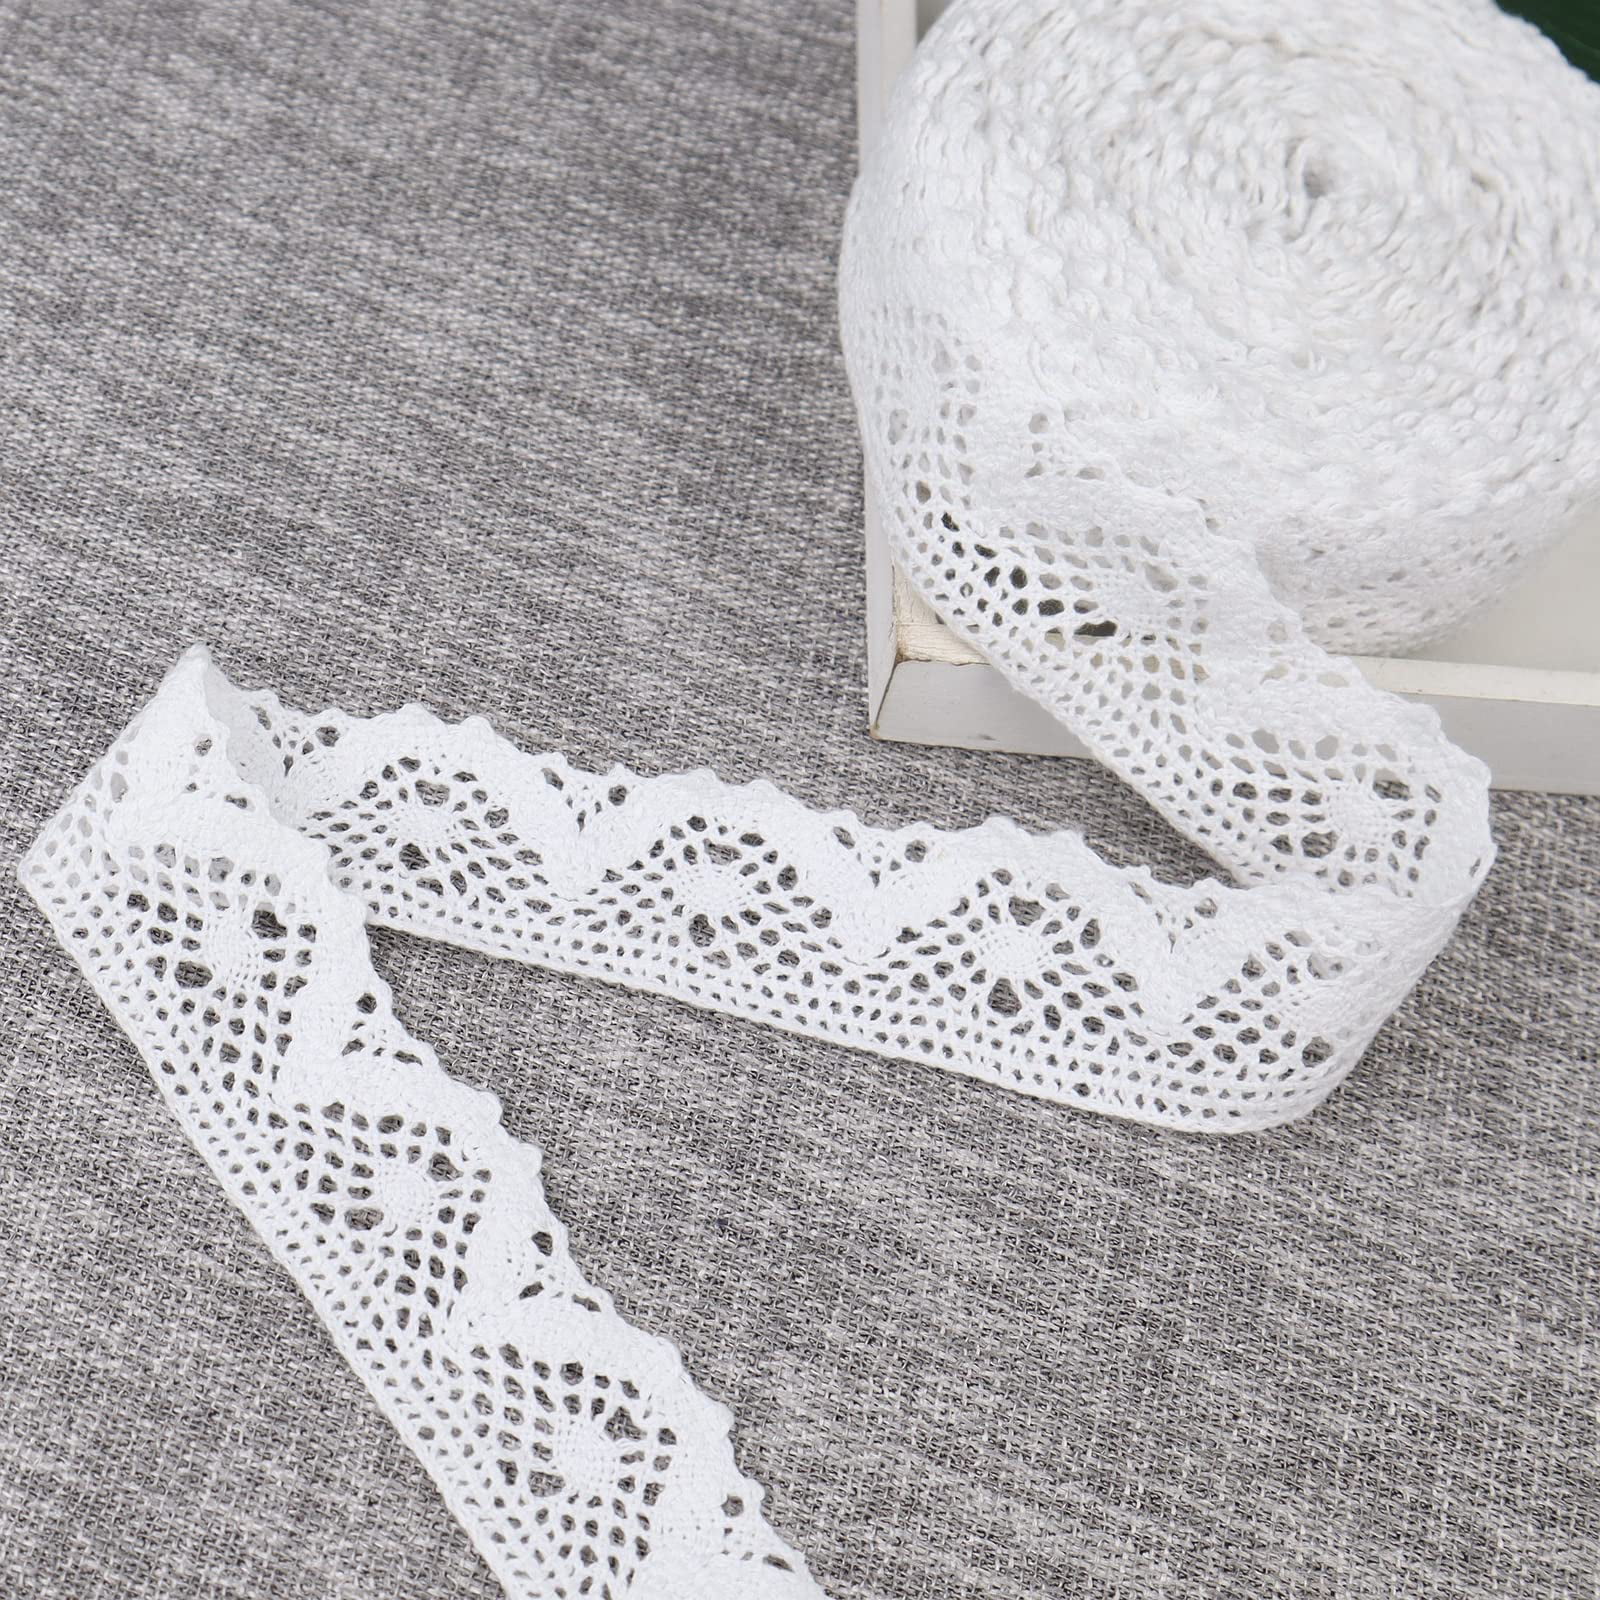 BOGO Crochet Lace Ribbon - 2 1/4 Wide x 10 Yards Long - Ecru